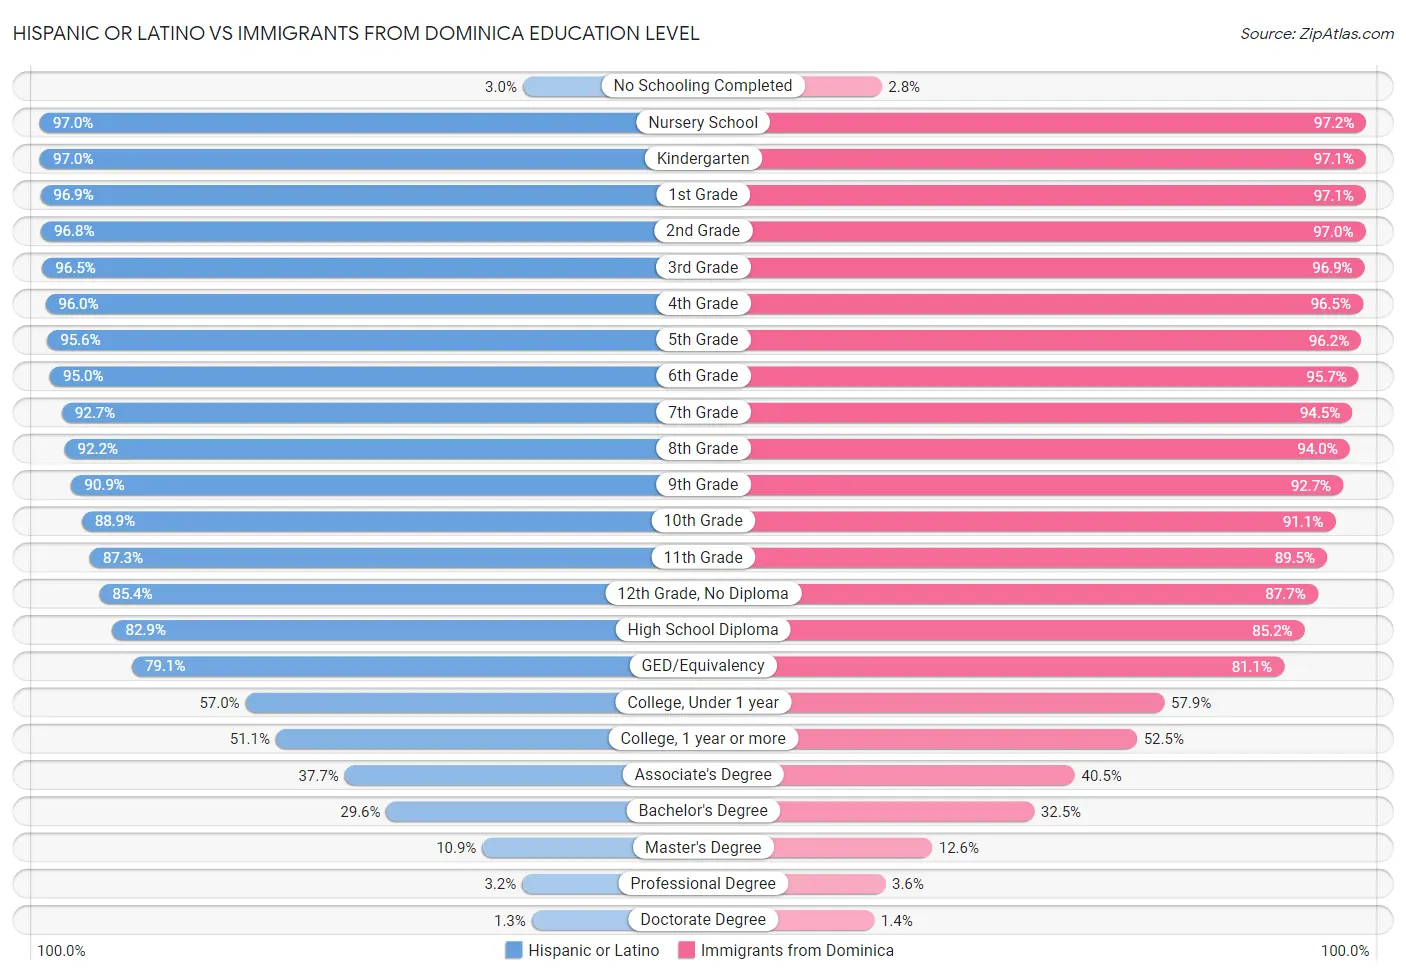 Hispanic or Latino vs Immigrants from Dominica Education Level